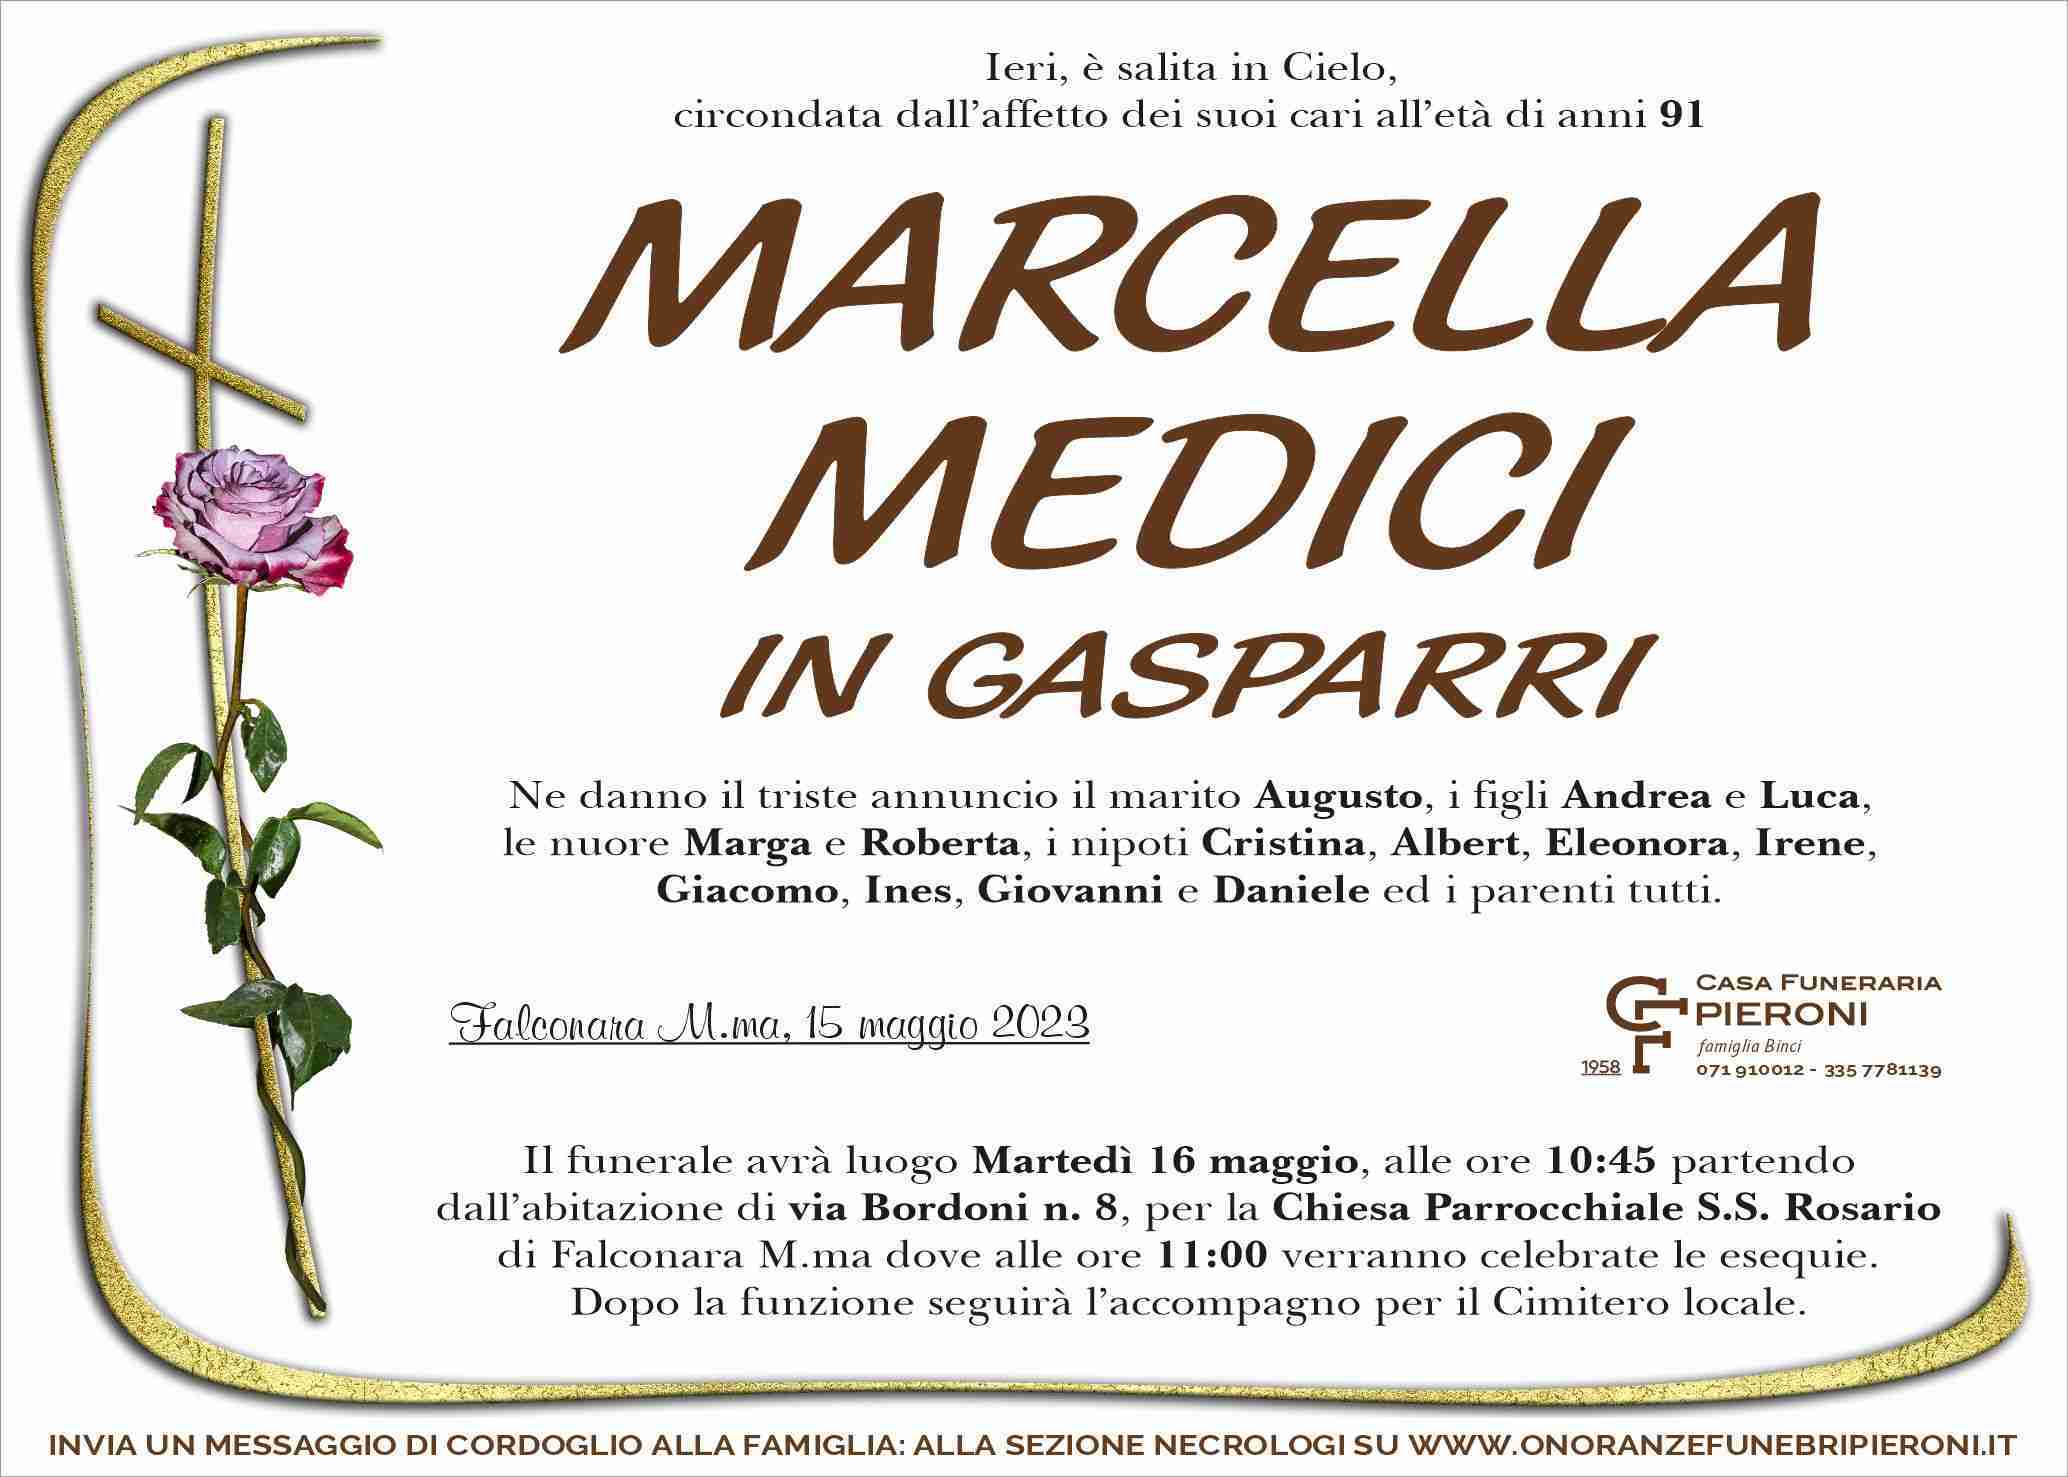 Marcella Medici